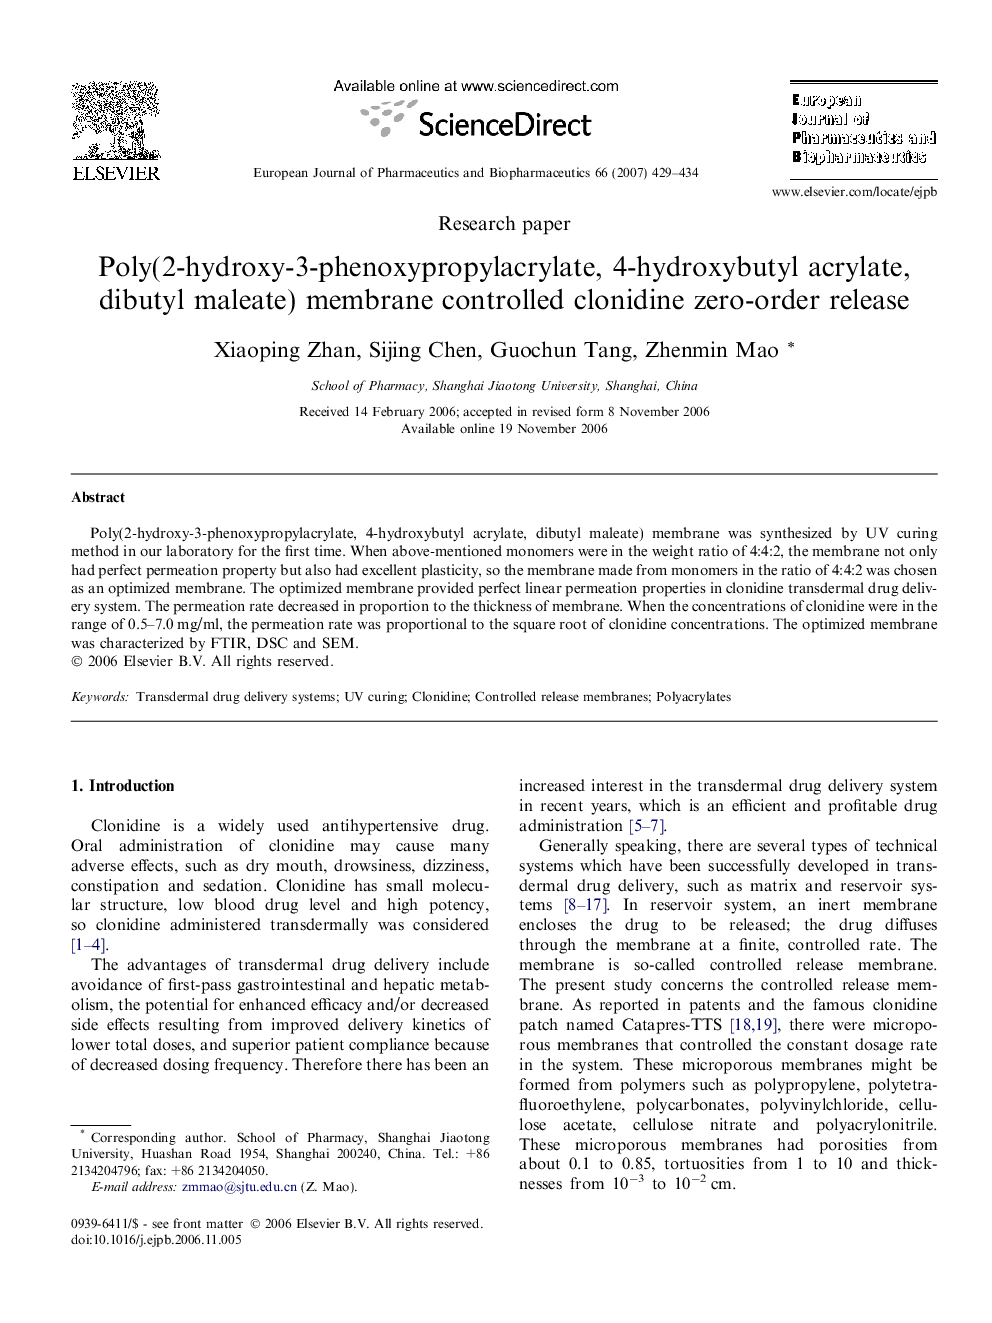 Poly(2-hydroxy-3-phenoxypropylacrylate, 4-hydroxybutyl acrylate, dibutyl maleate) membrane controlled clonidine zero-order release